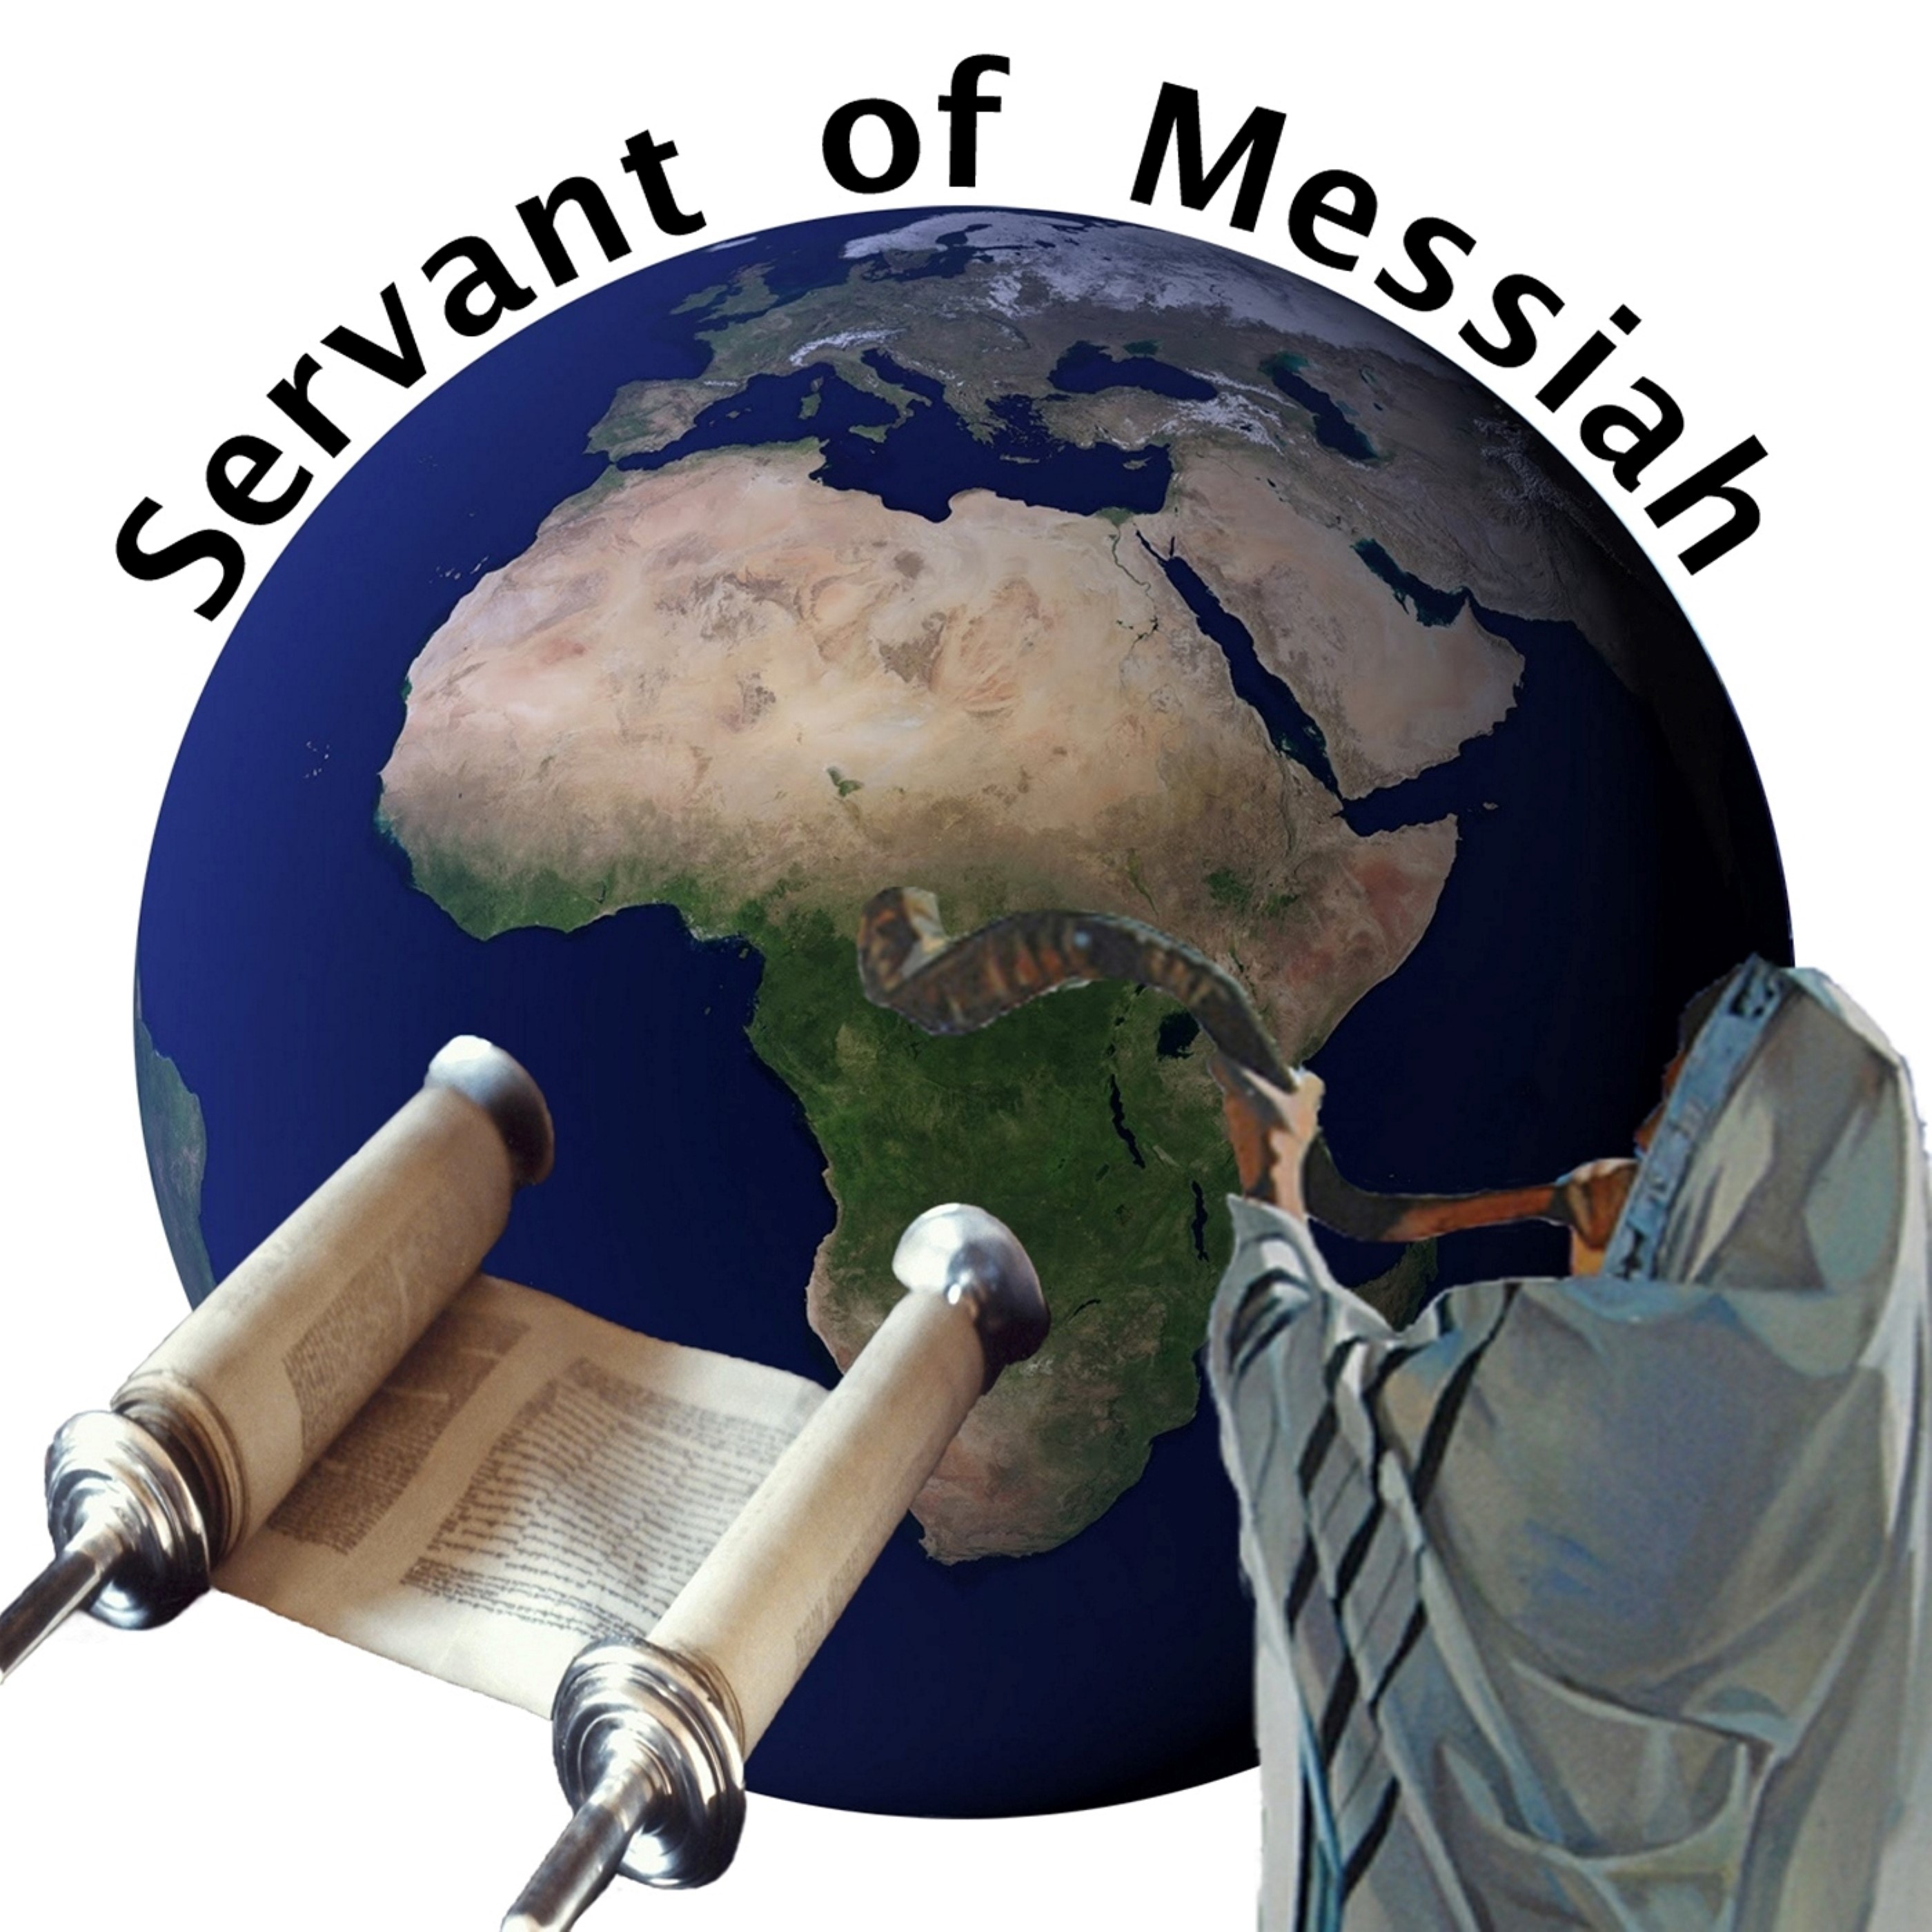 Servant of Messiah Ministries